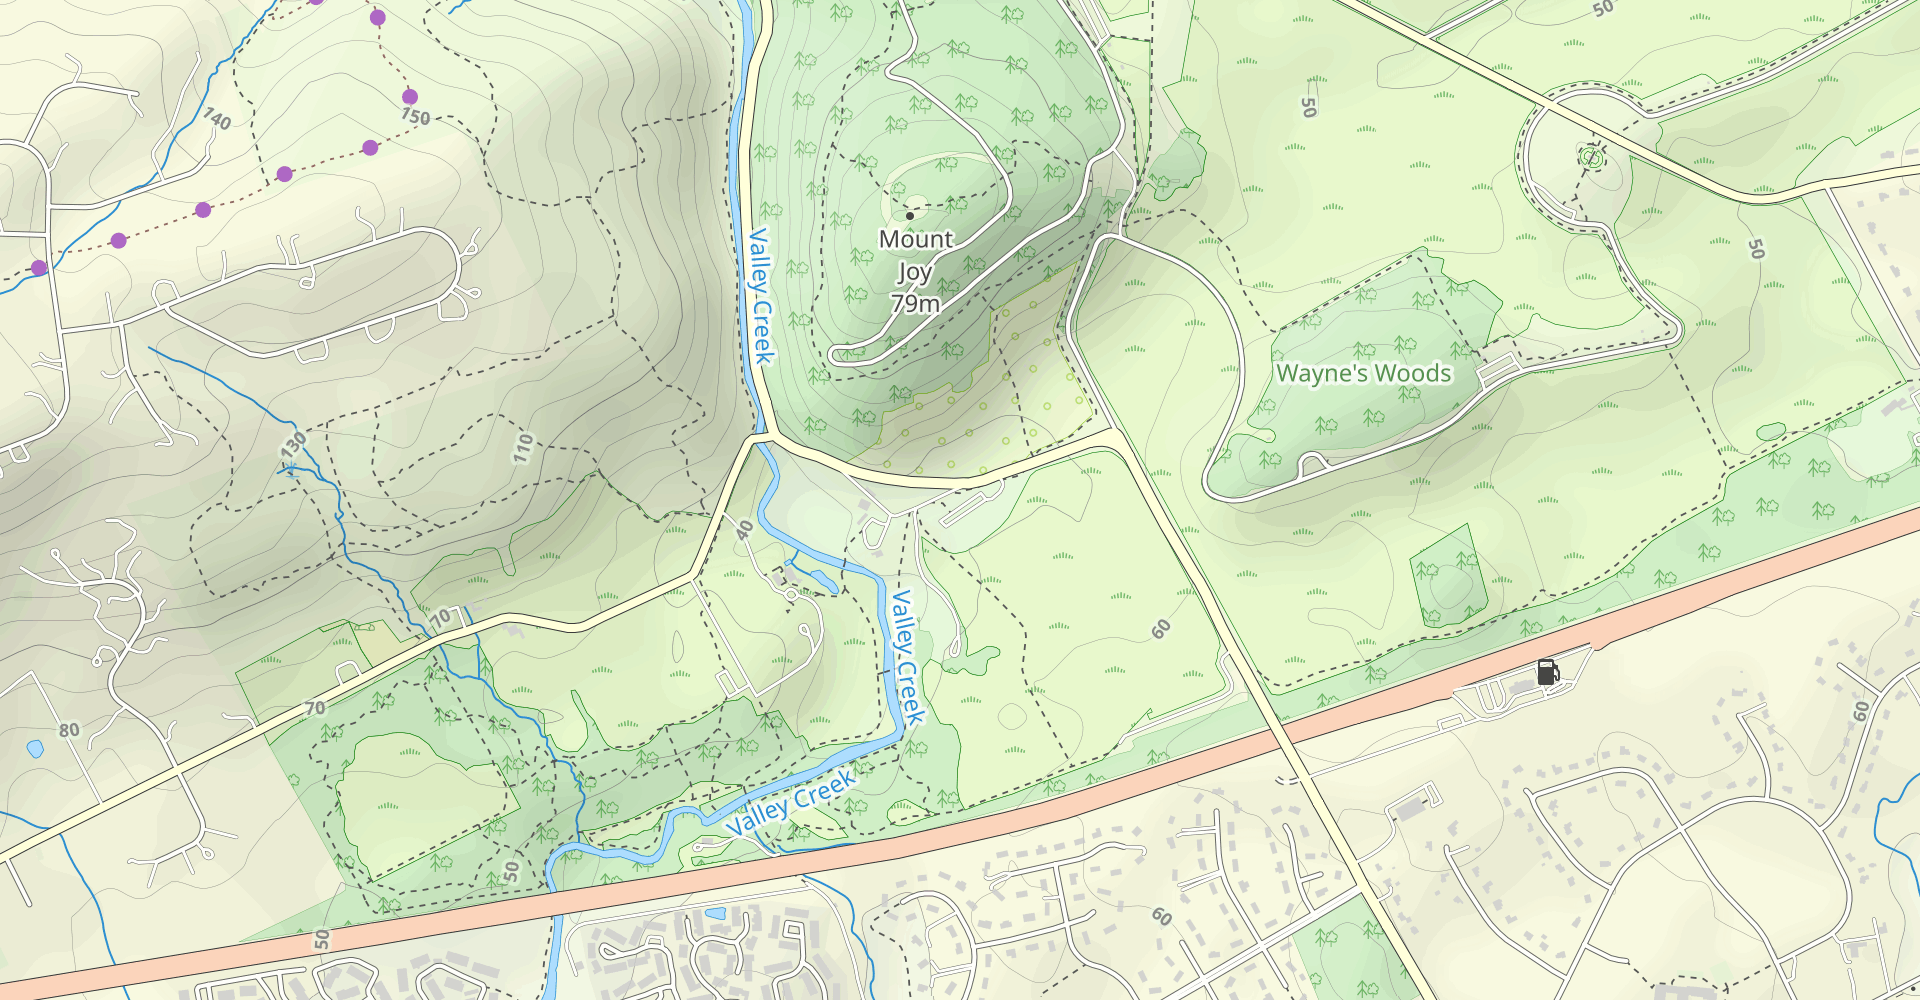 Mount Joy Trail to Mount Misery Trail Loop